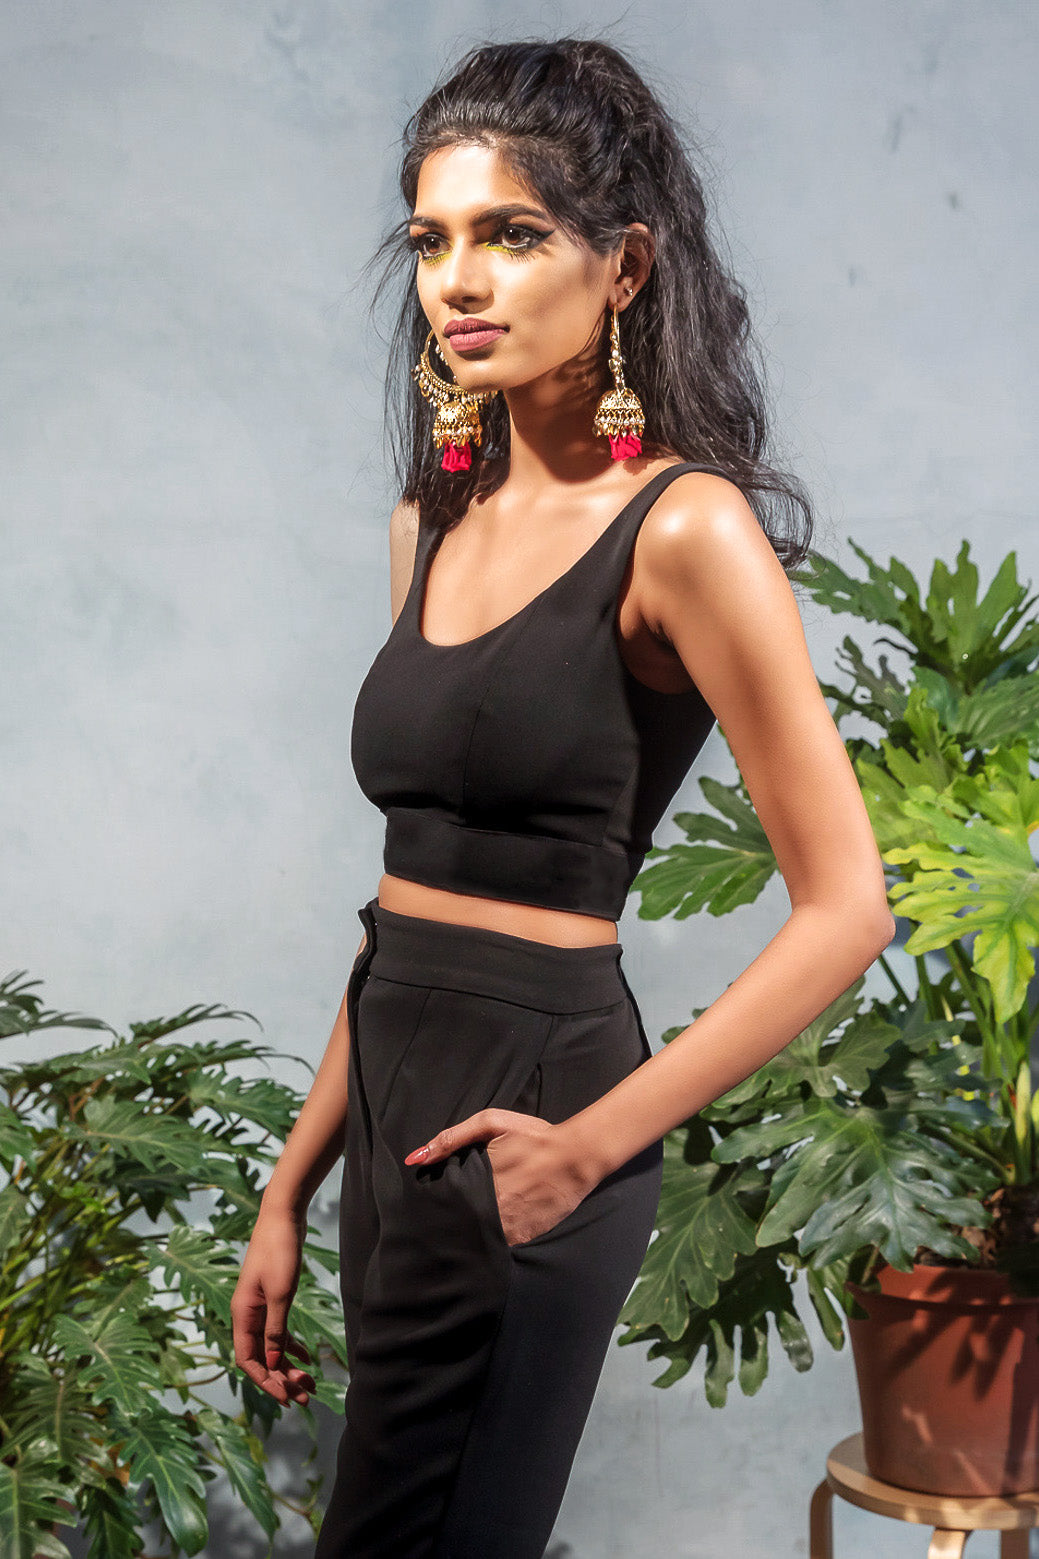 SYRAH Stretch Scoop Neck Crop Top - Side View - Harleen Kaur - Indowestern Womenswear